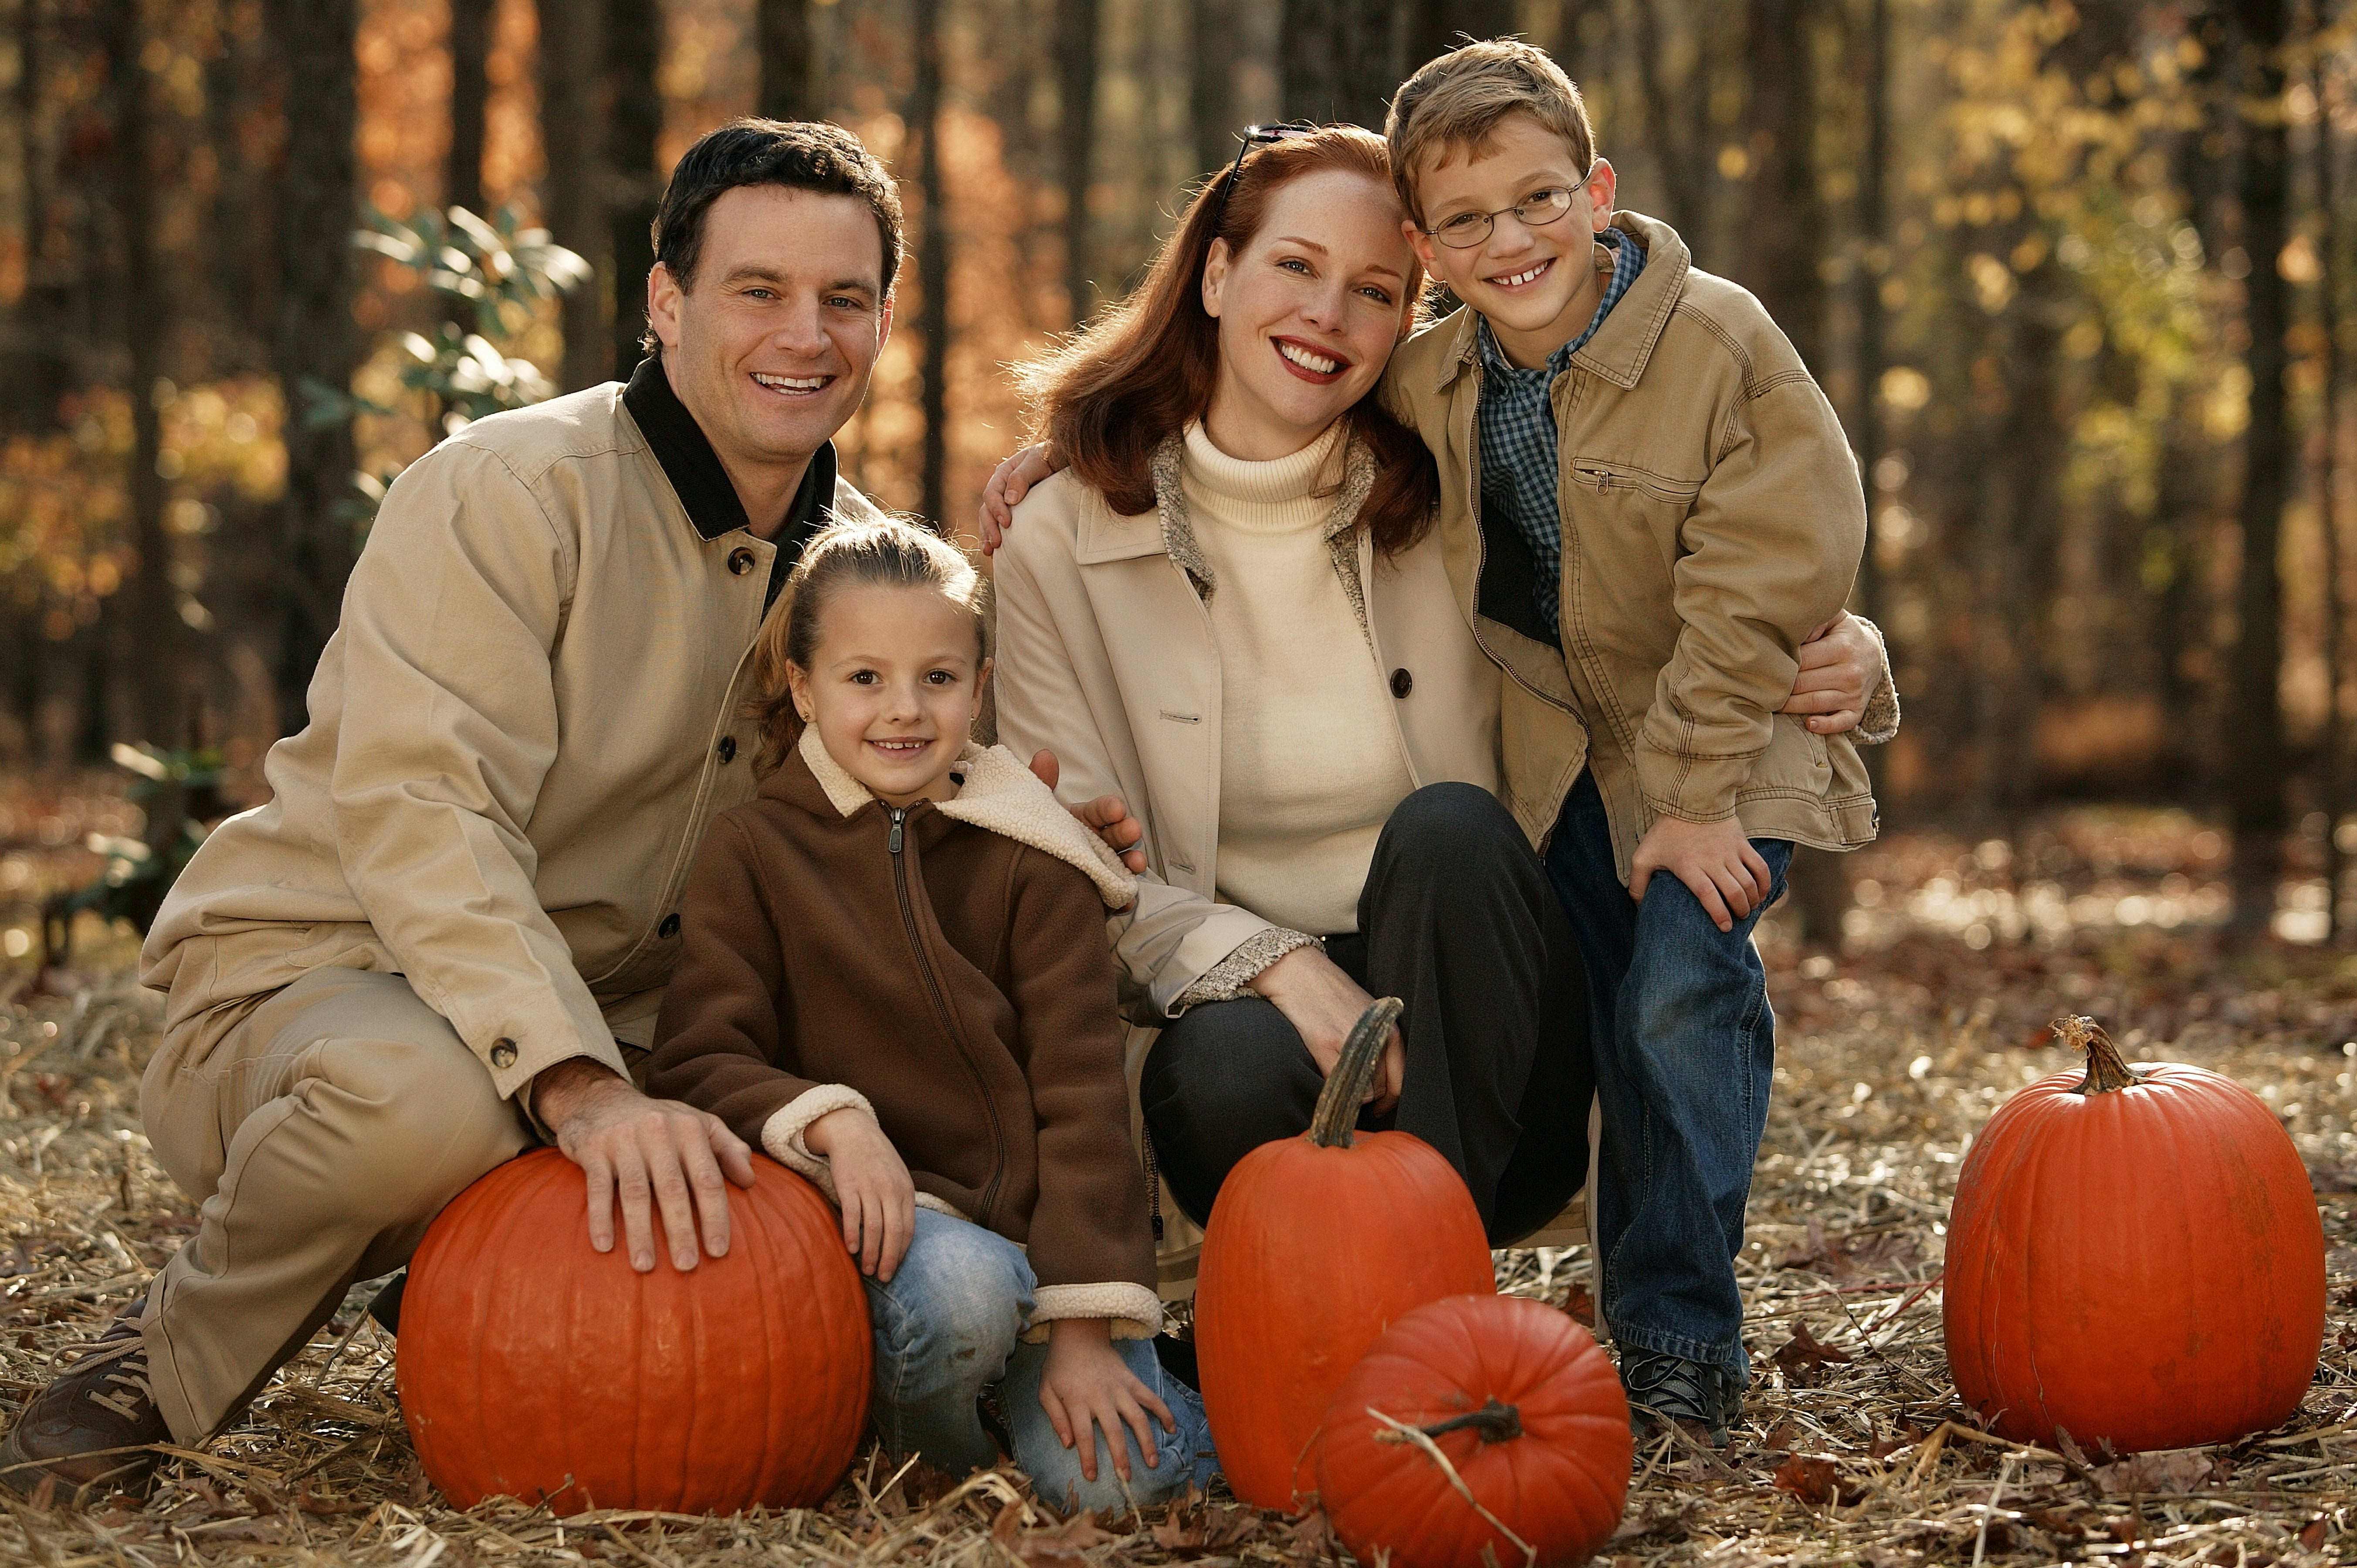 four orange pumpkins, family, finding, forest, autumn, smiling